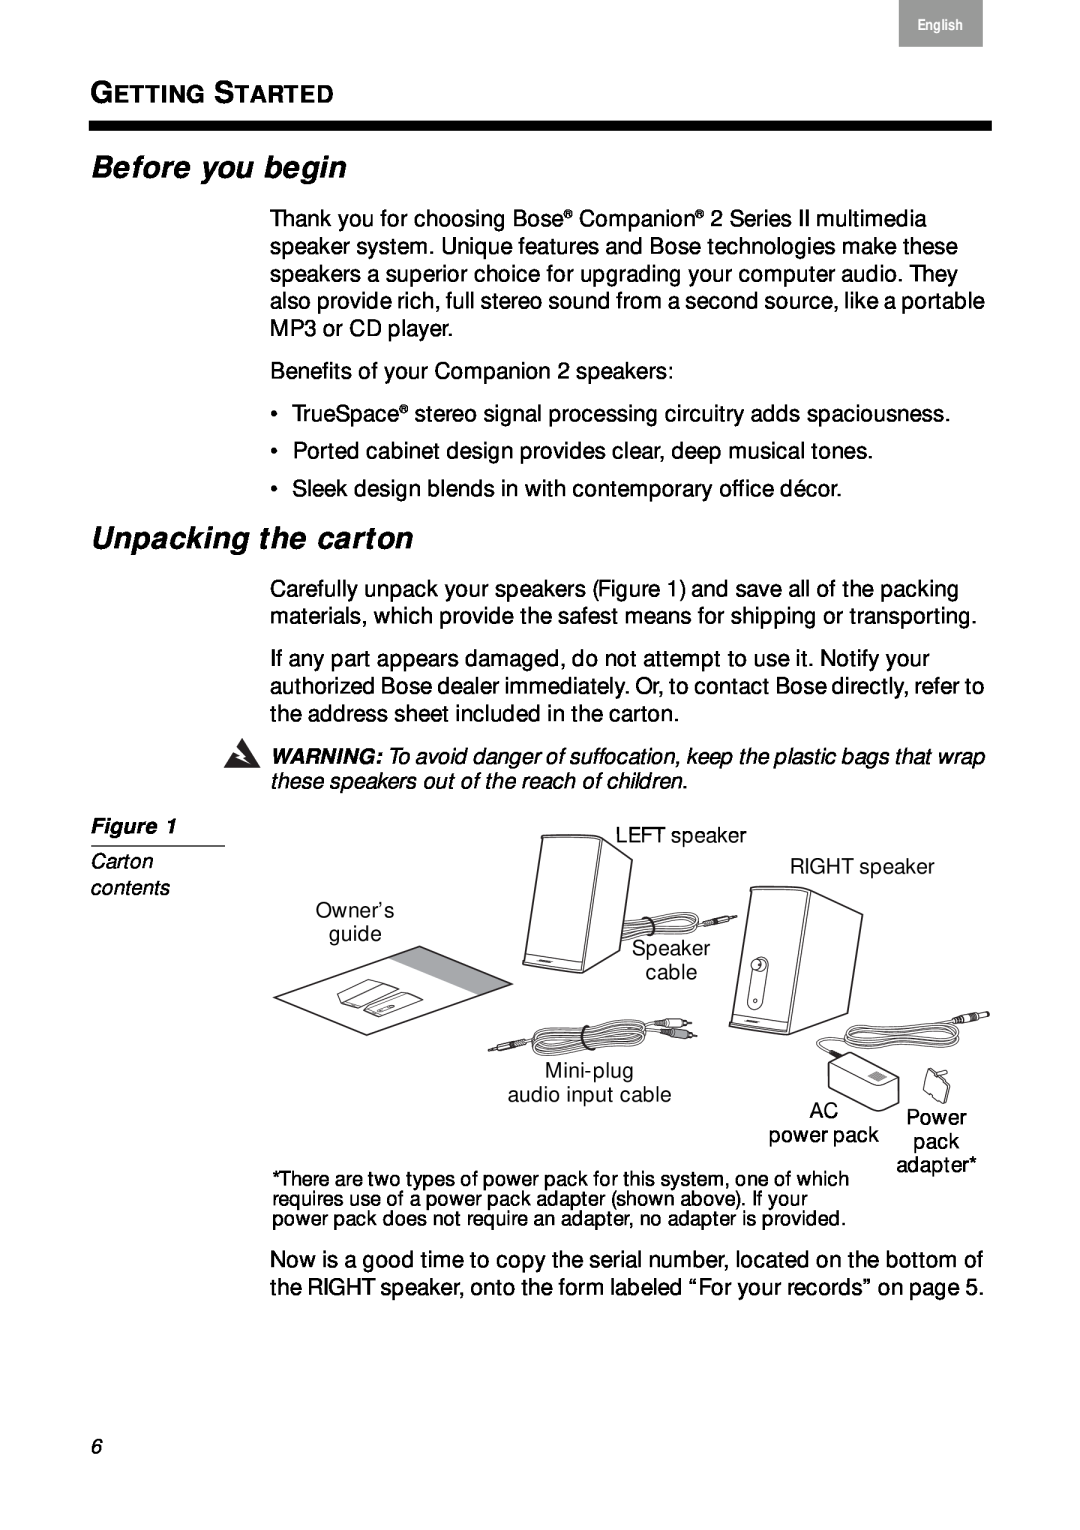 Bose 2 Series II, 40274 manual Before you begin, Unpacking the carton, Getting Started 